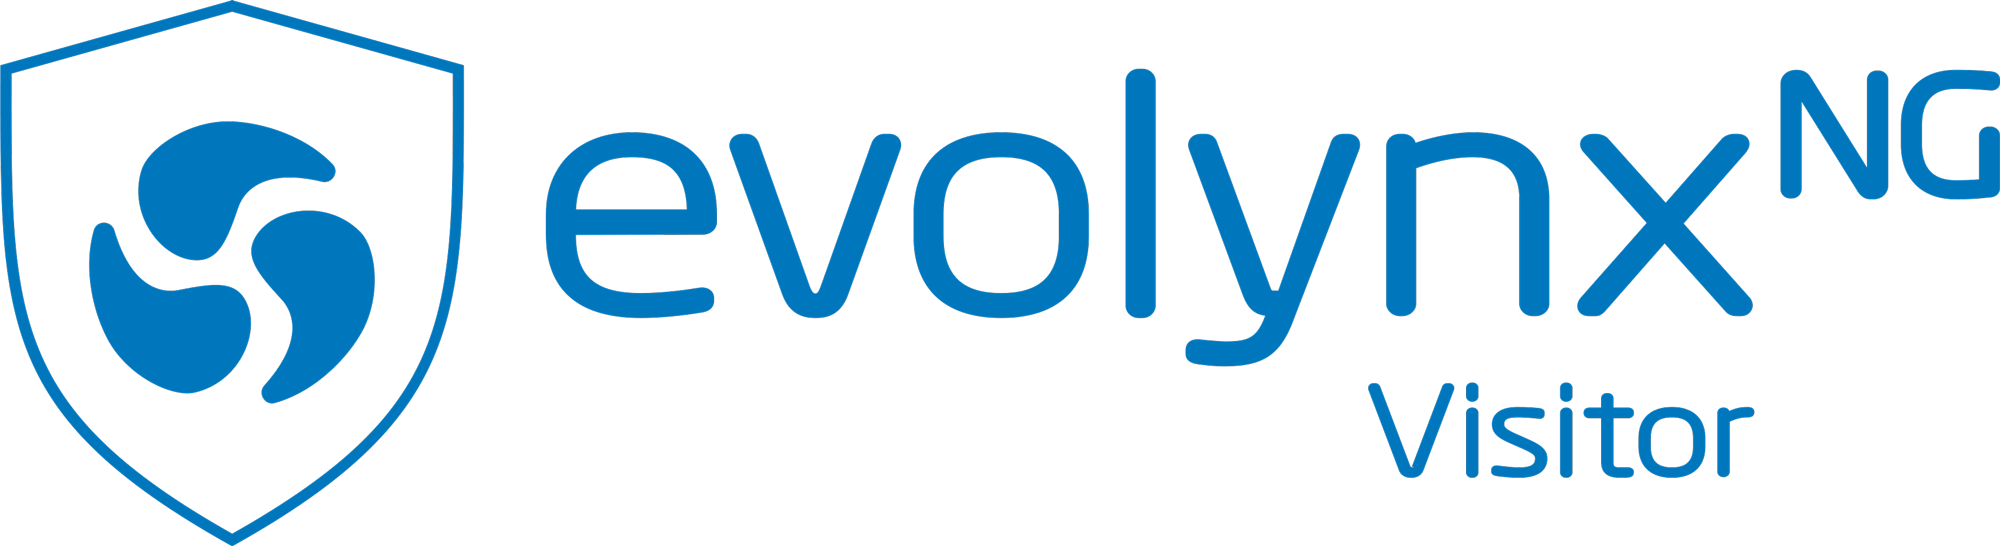 logo evolynxNG software visitor